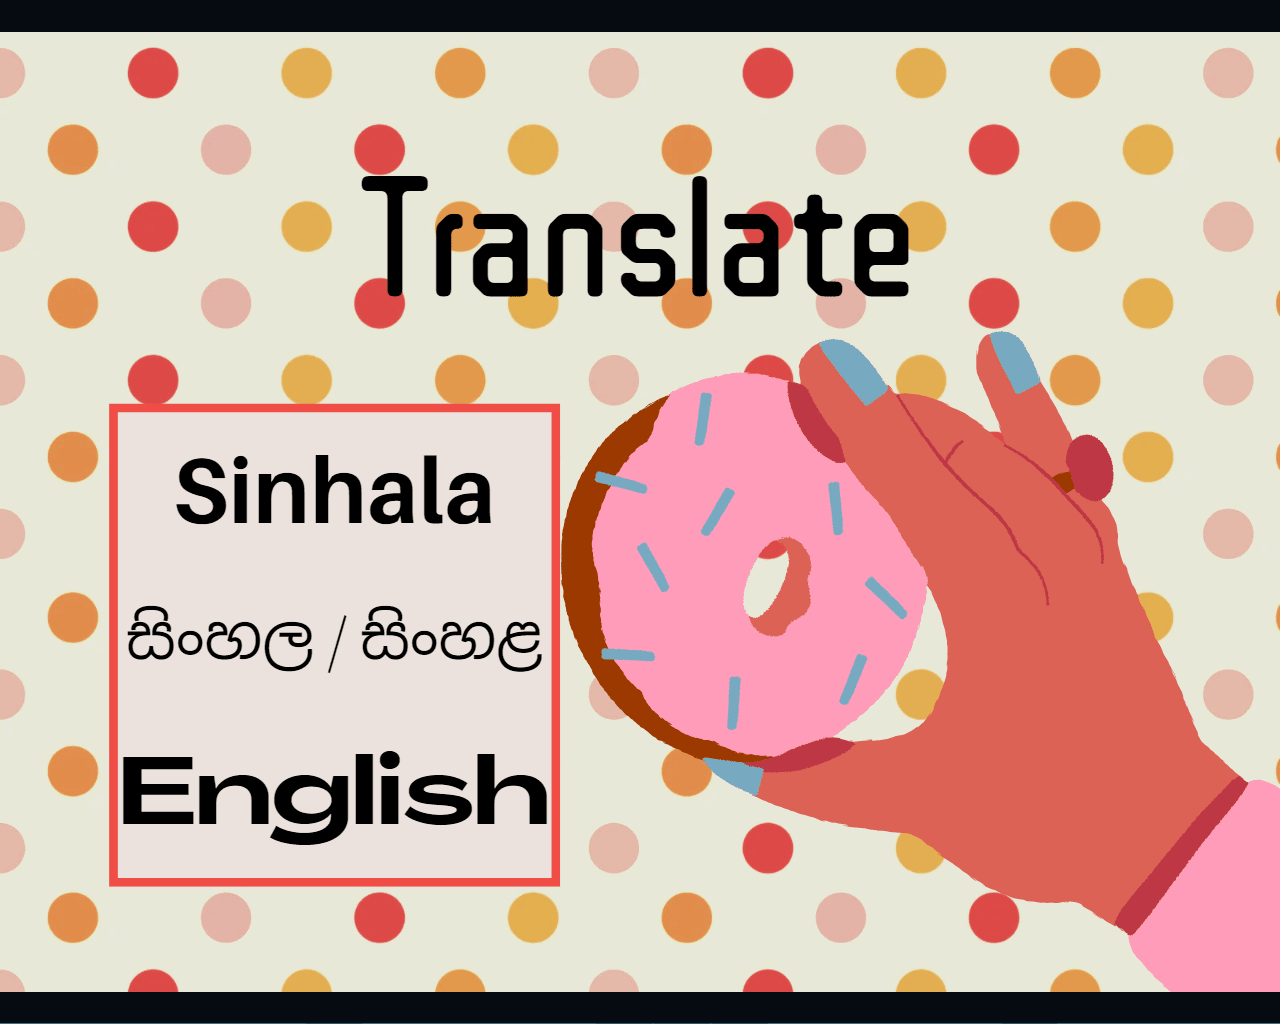 I will translate Sinhala and English